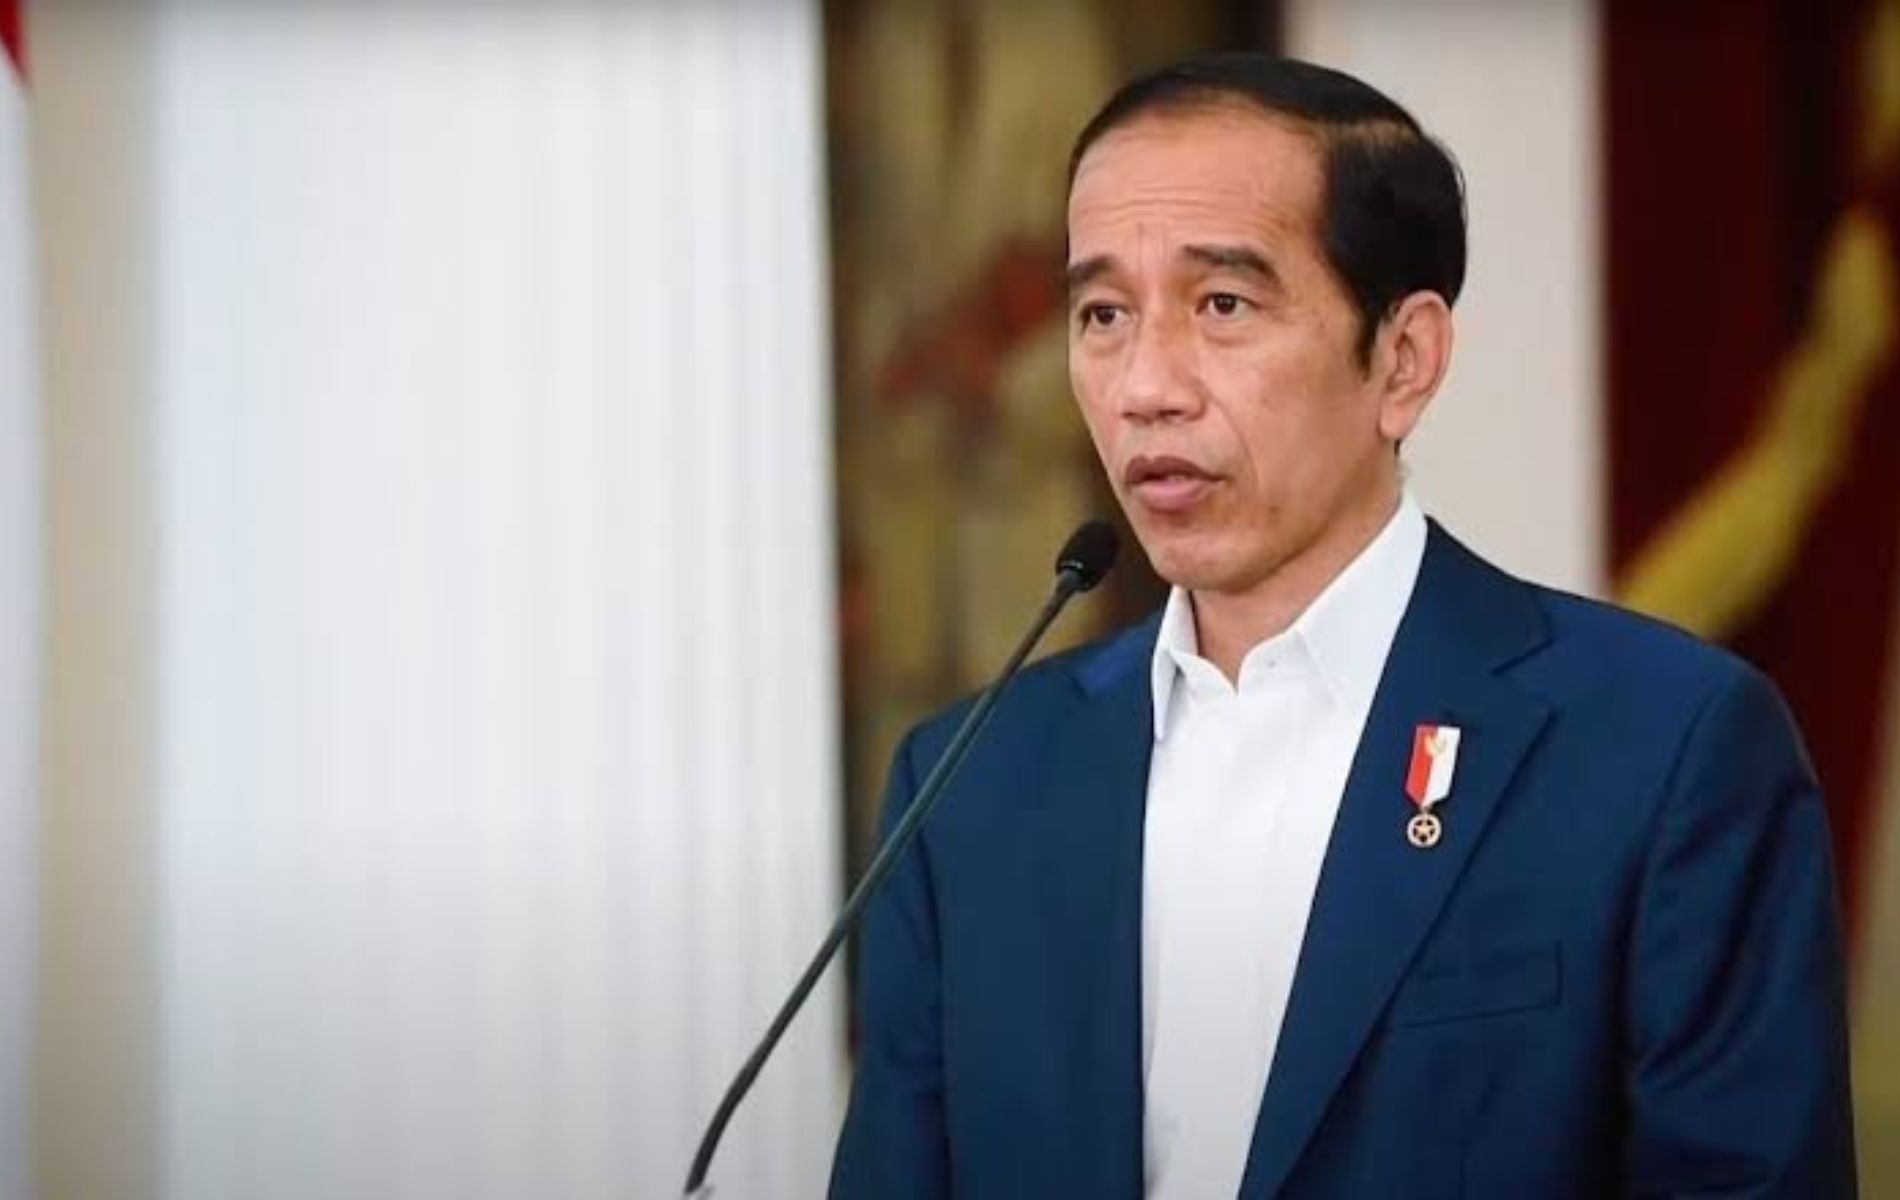 Presiden Joko Widodo (Jokowi) respons soal anaknya, Kaesang Pangarep yang diisukan jadi calon Wali Kota Depok